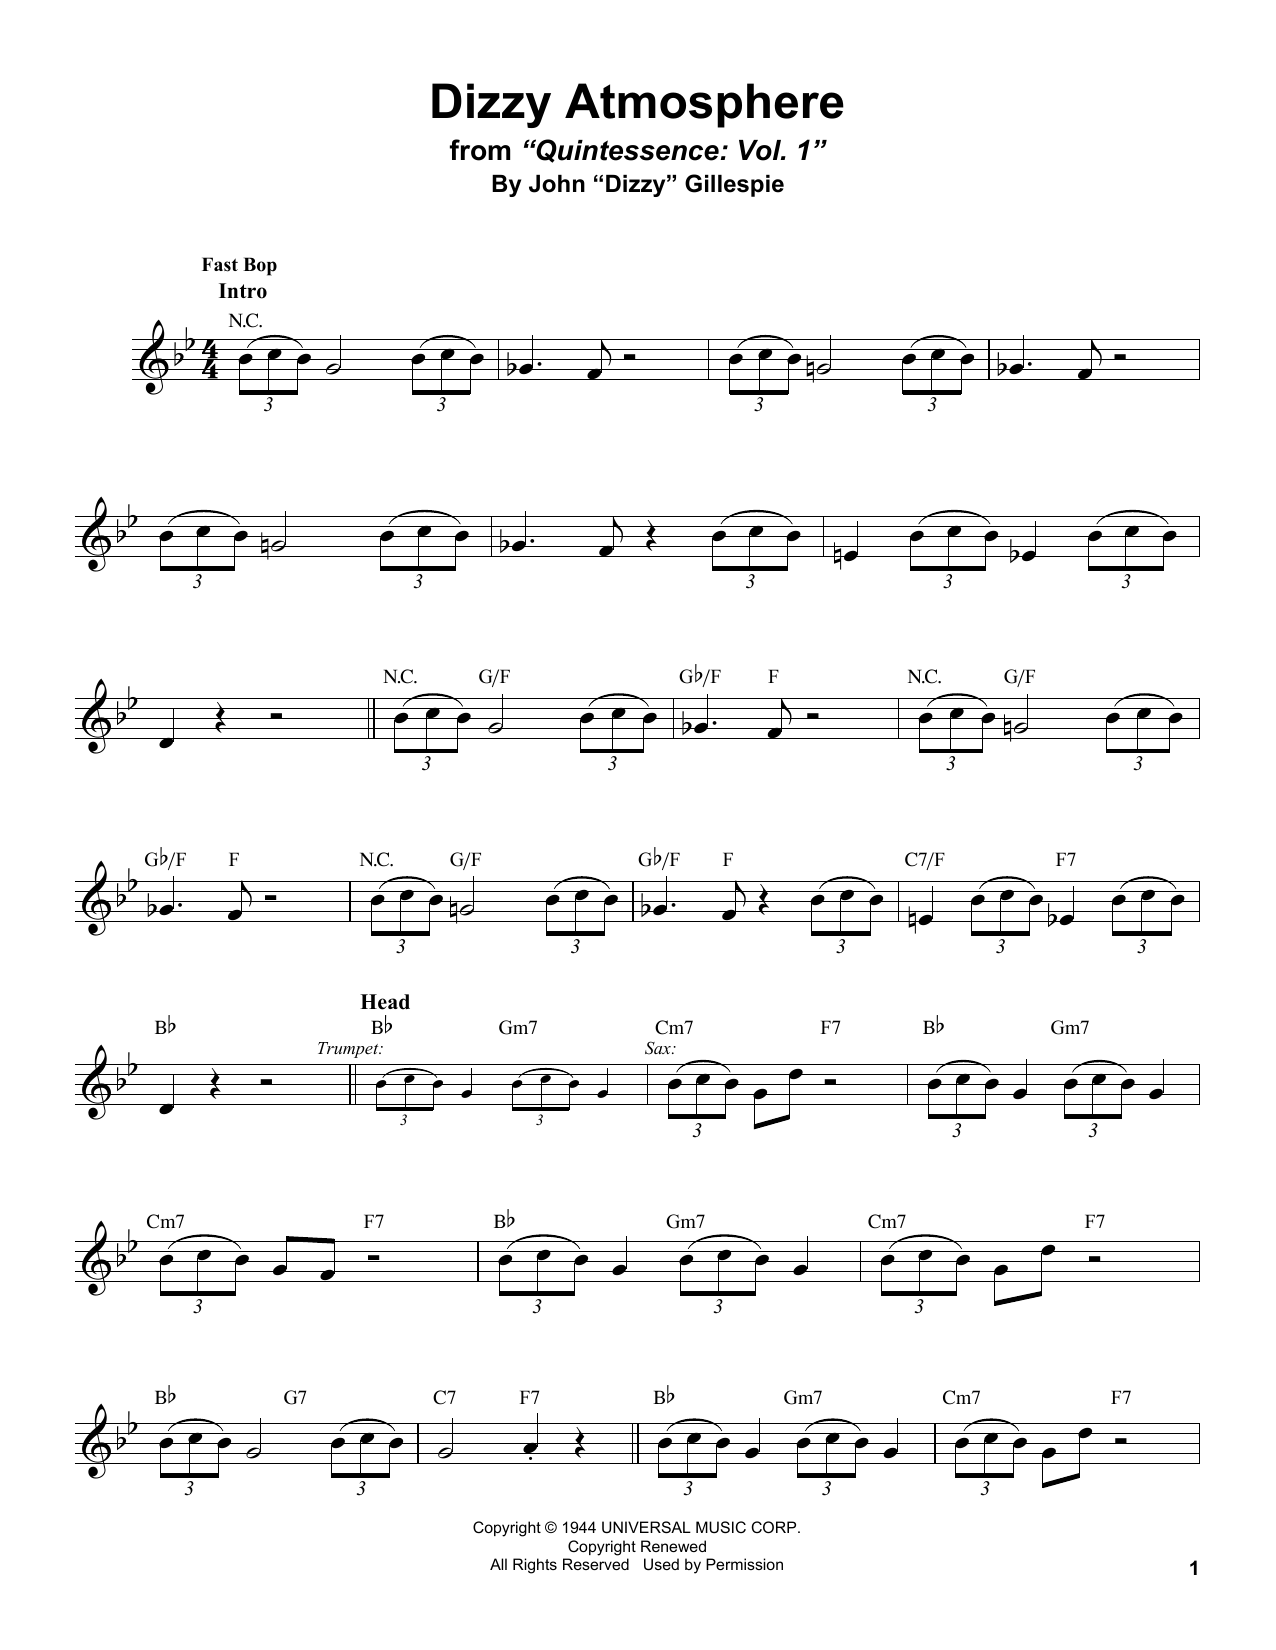 Stan Getz Dizzy Atmosphere Sheet Music Notes & Chords for Alto Sax Transcription - Download or Print PDF